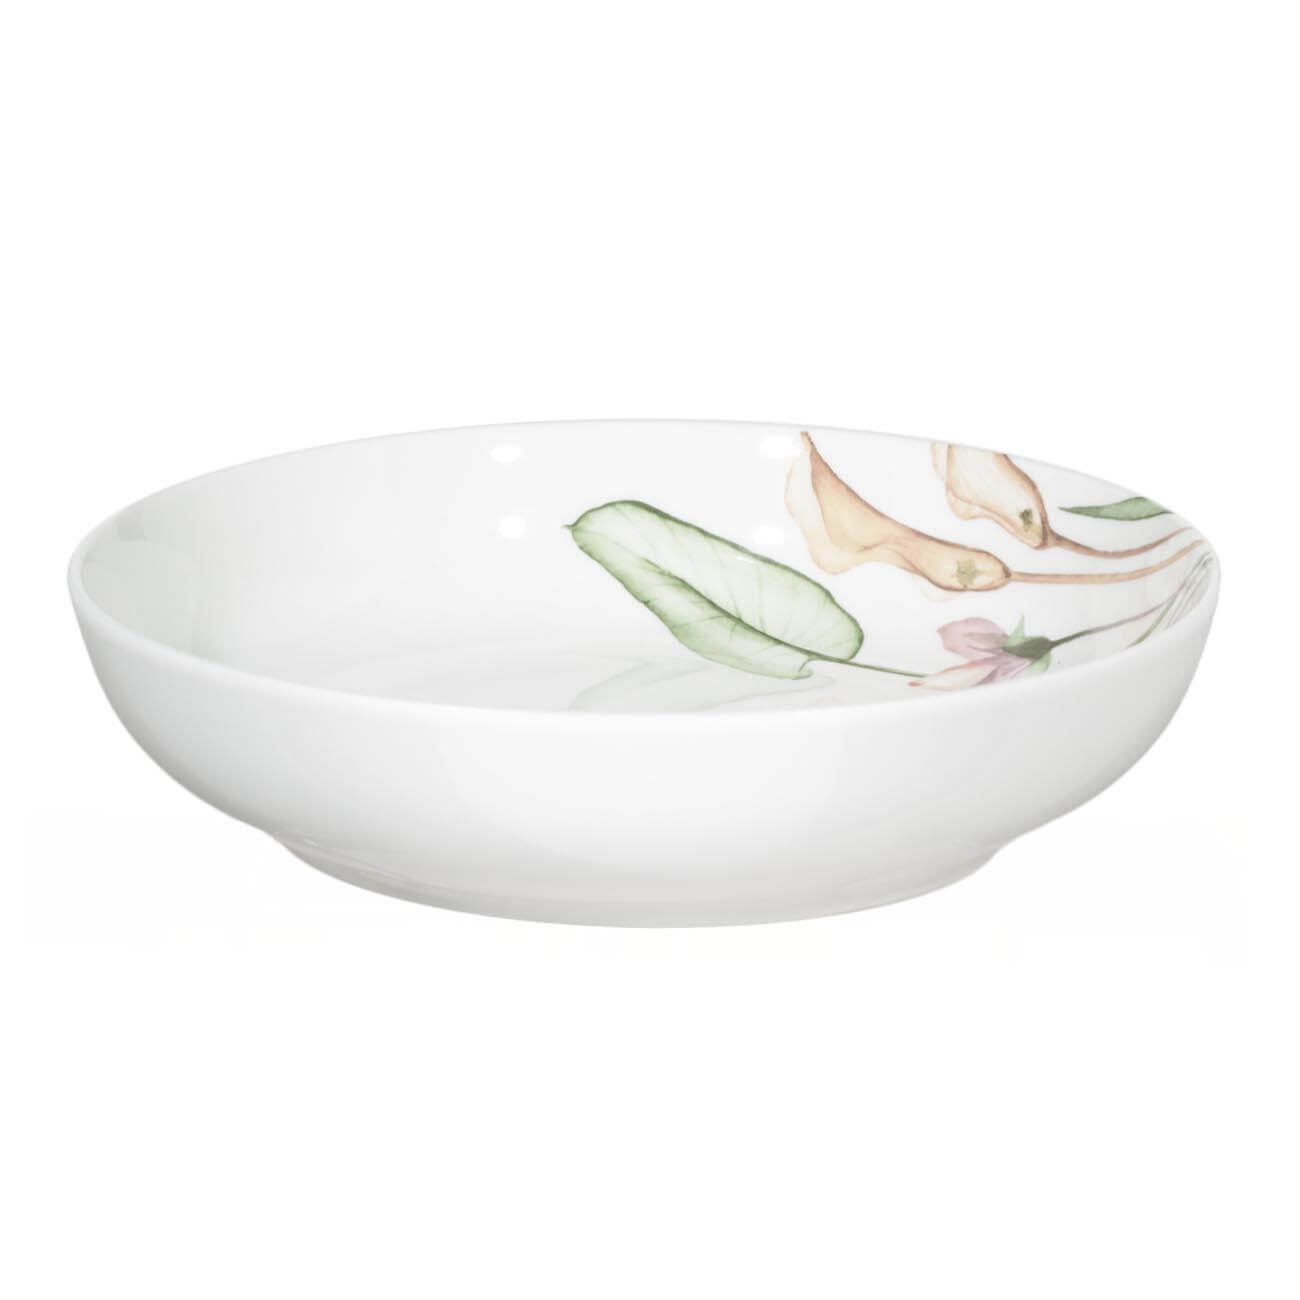 Тарелка суповая, 20 см, фарфор N, белая, Великолепный цветок, Gorgeous flower - фото 1